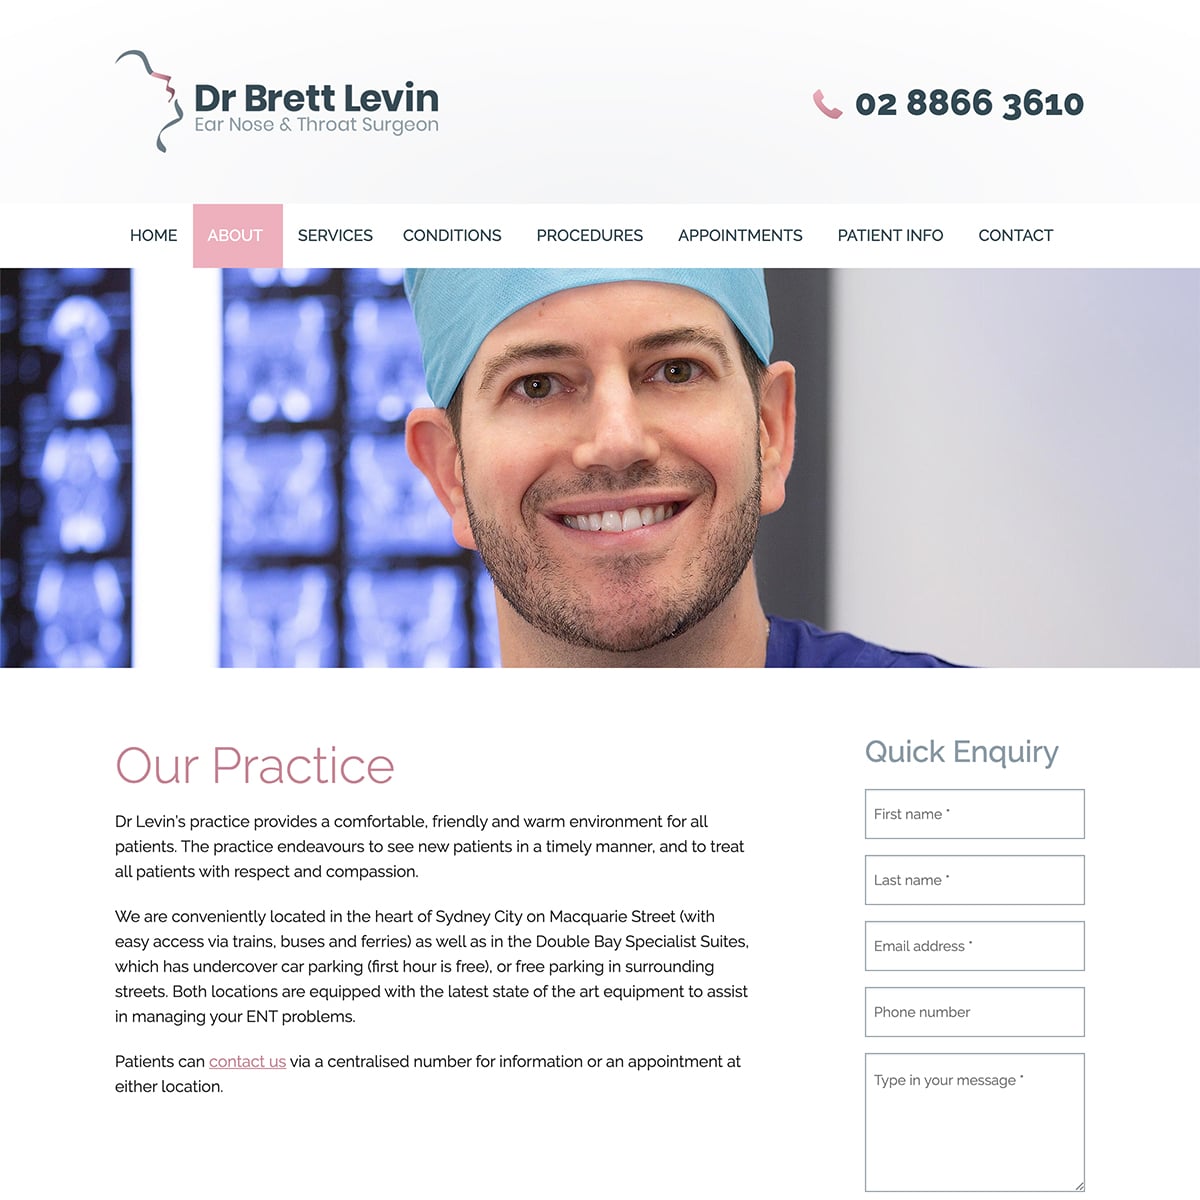 Dr Brett Levin - Our Practice